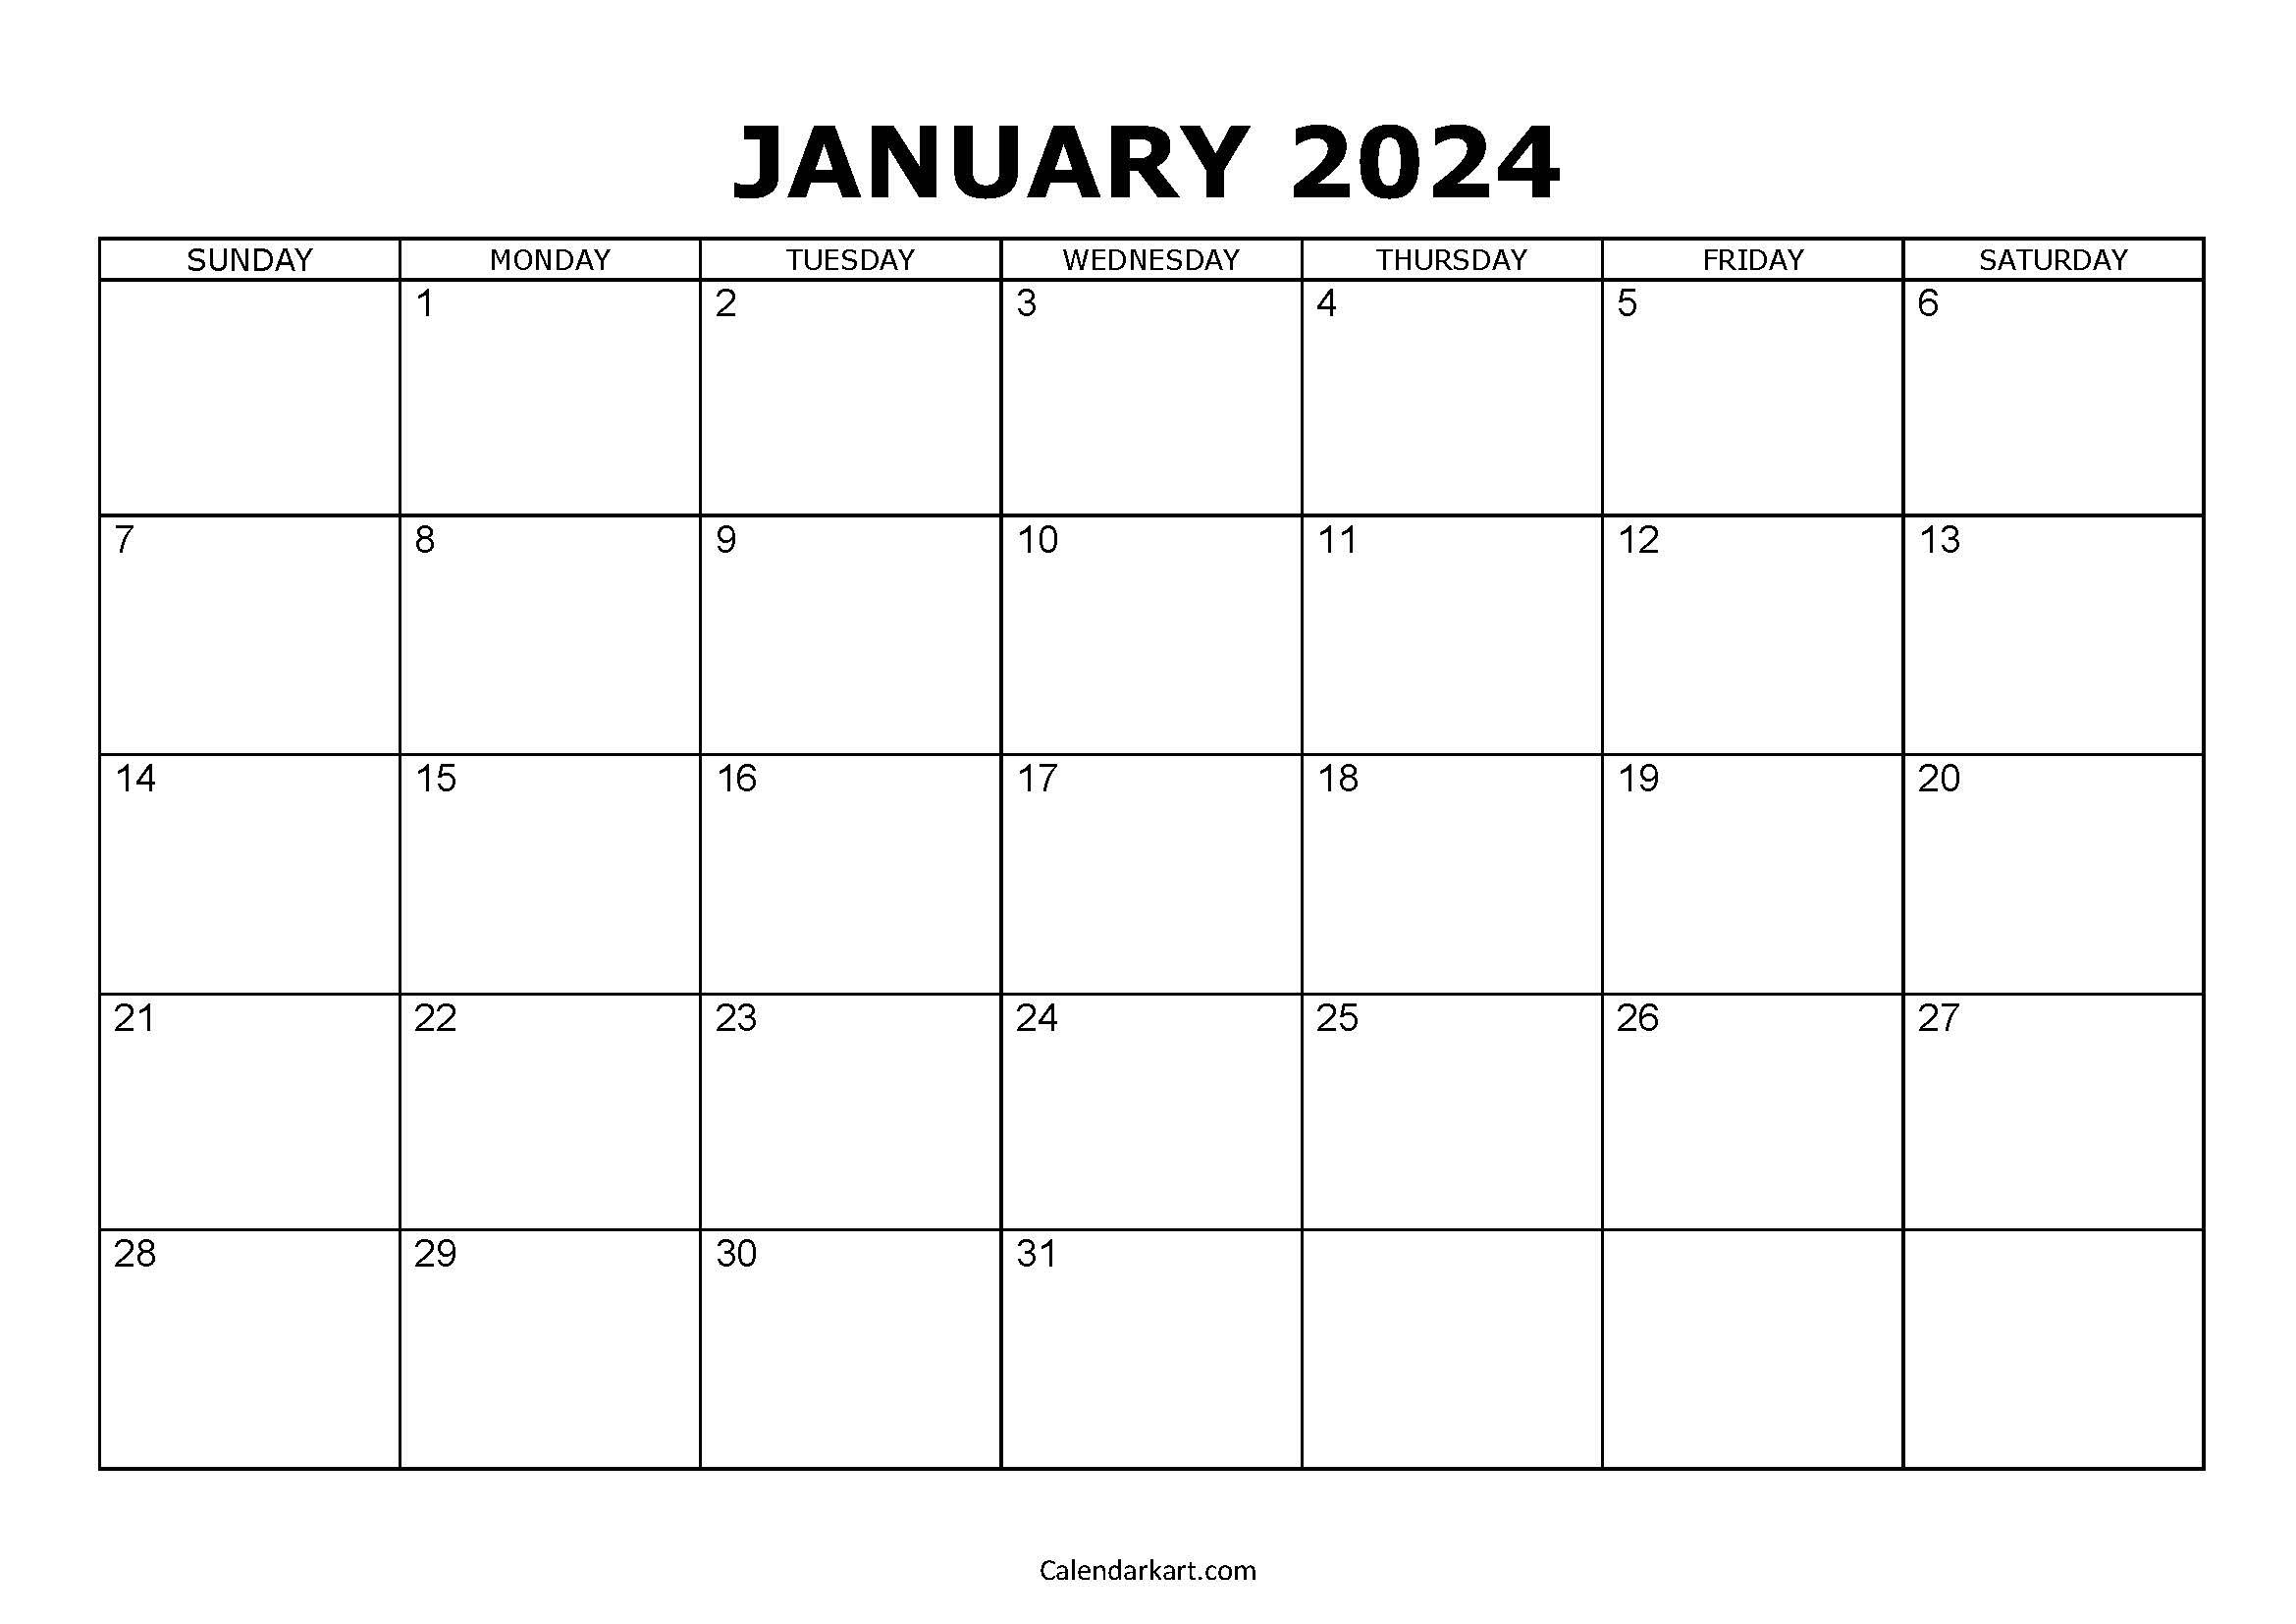 Free Printable January 2024 Calendars - Calendarkart with regard to Free Printable Calendar 2024 Minimalist